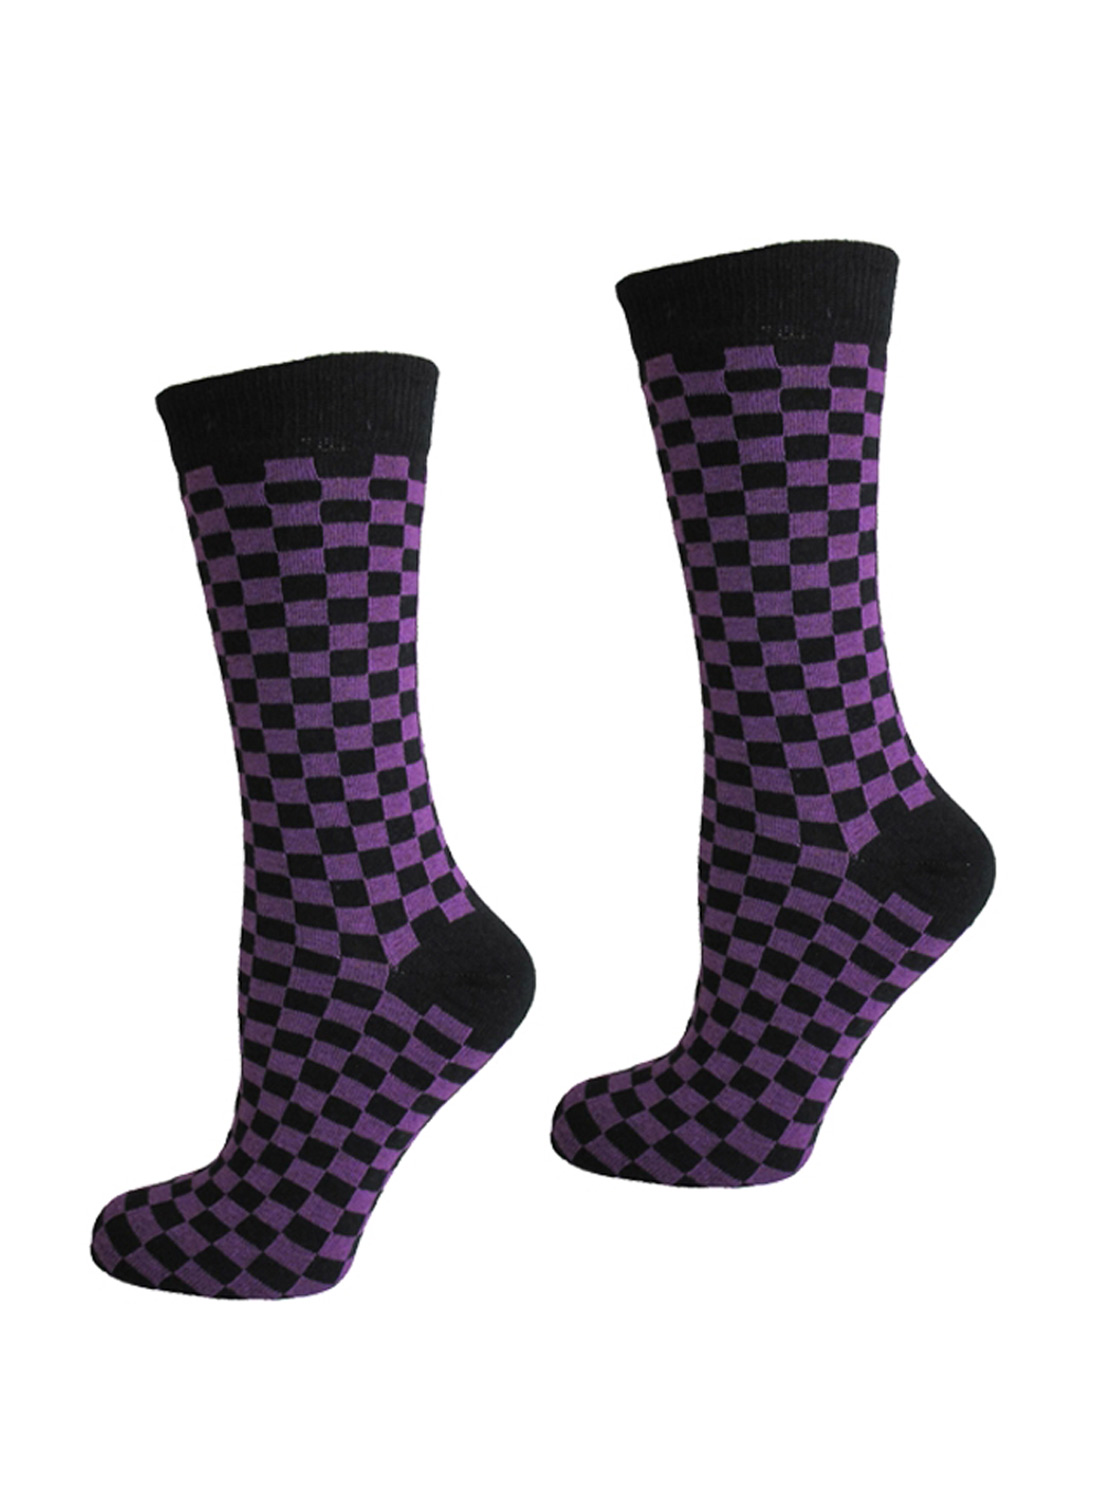 Men checkered Socks Black/Purple